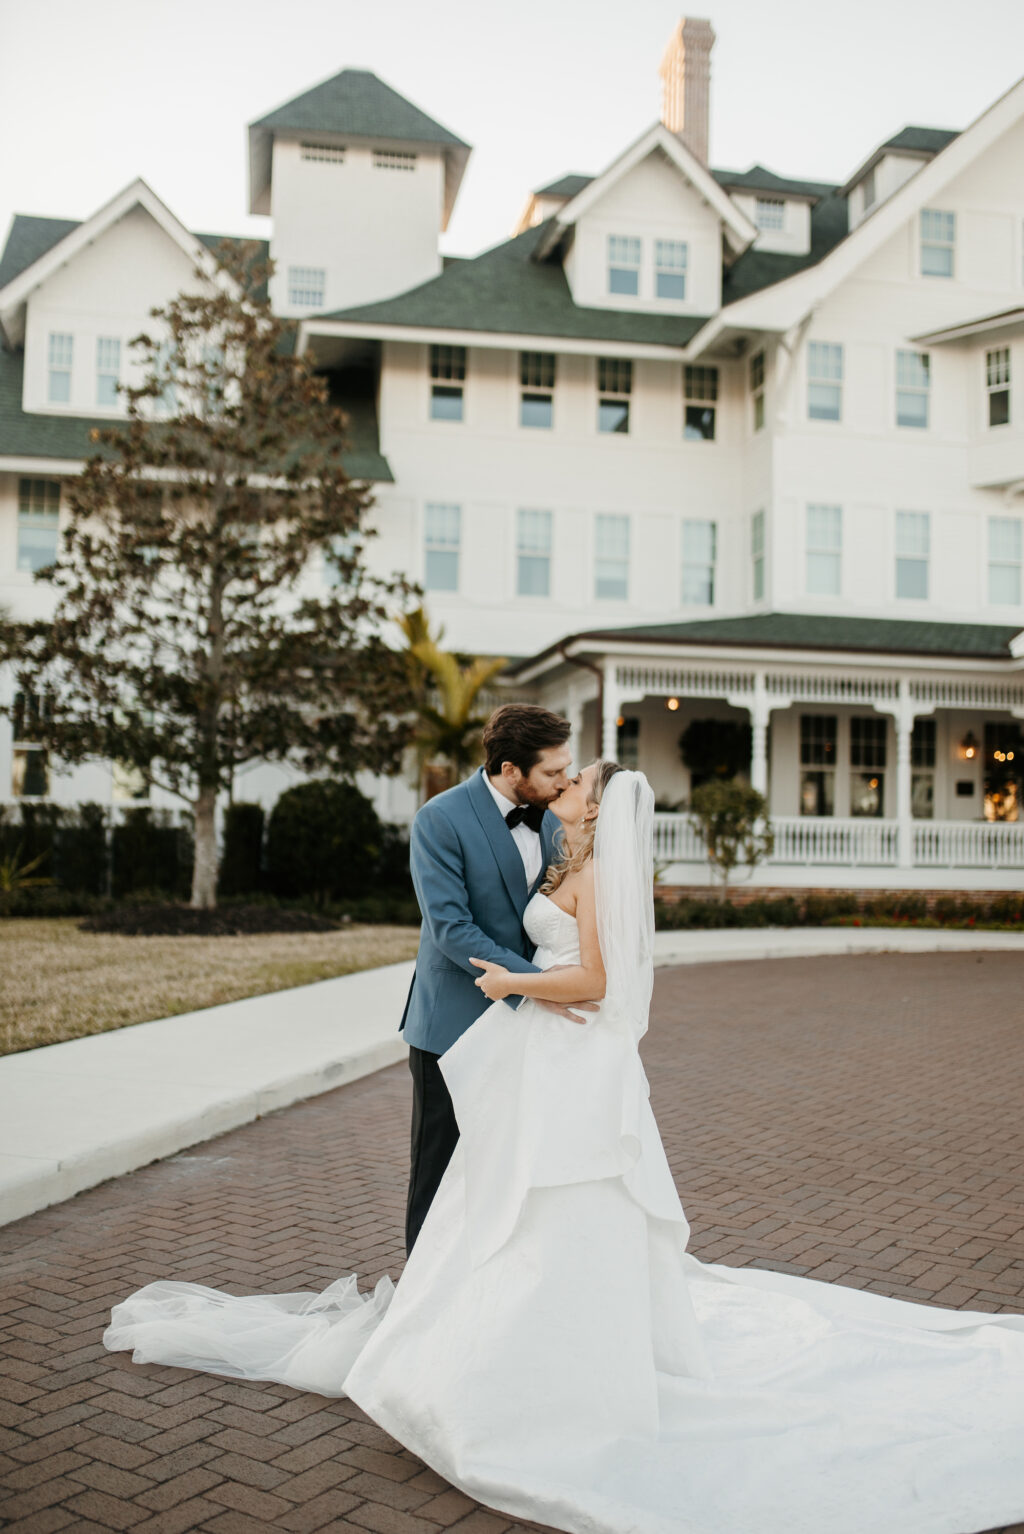 Romantic Bride and Groom Outdoor Kiss | Romantic Garden Estate Clearwater Wedding Venue Belleview Inn | Planner Elegant Affairs by Design